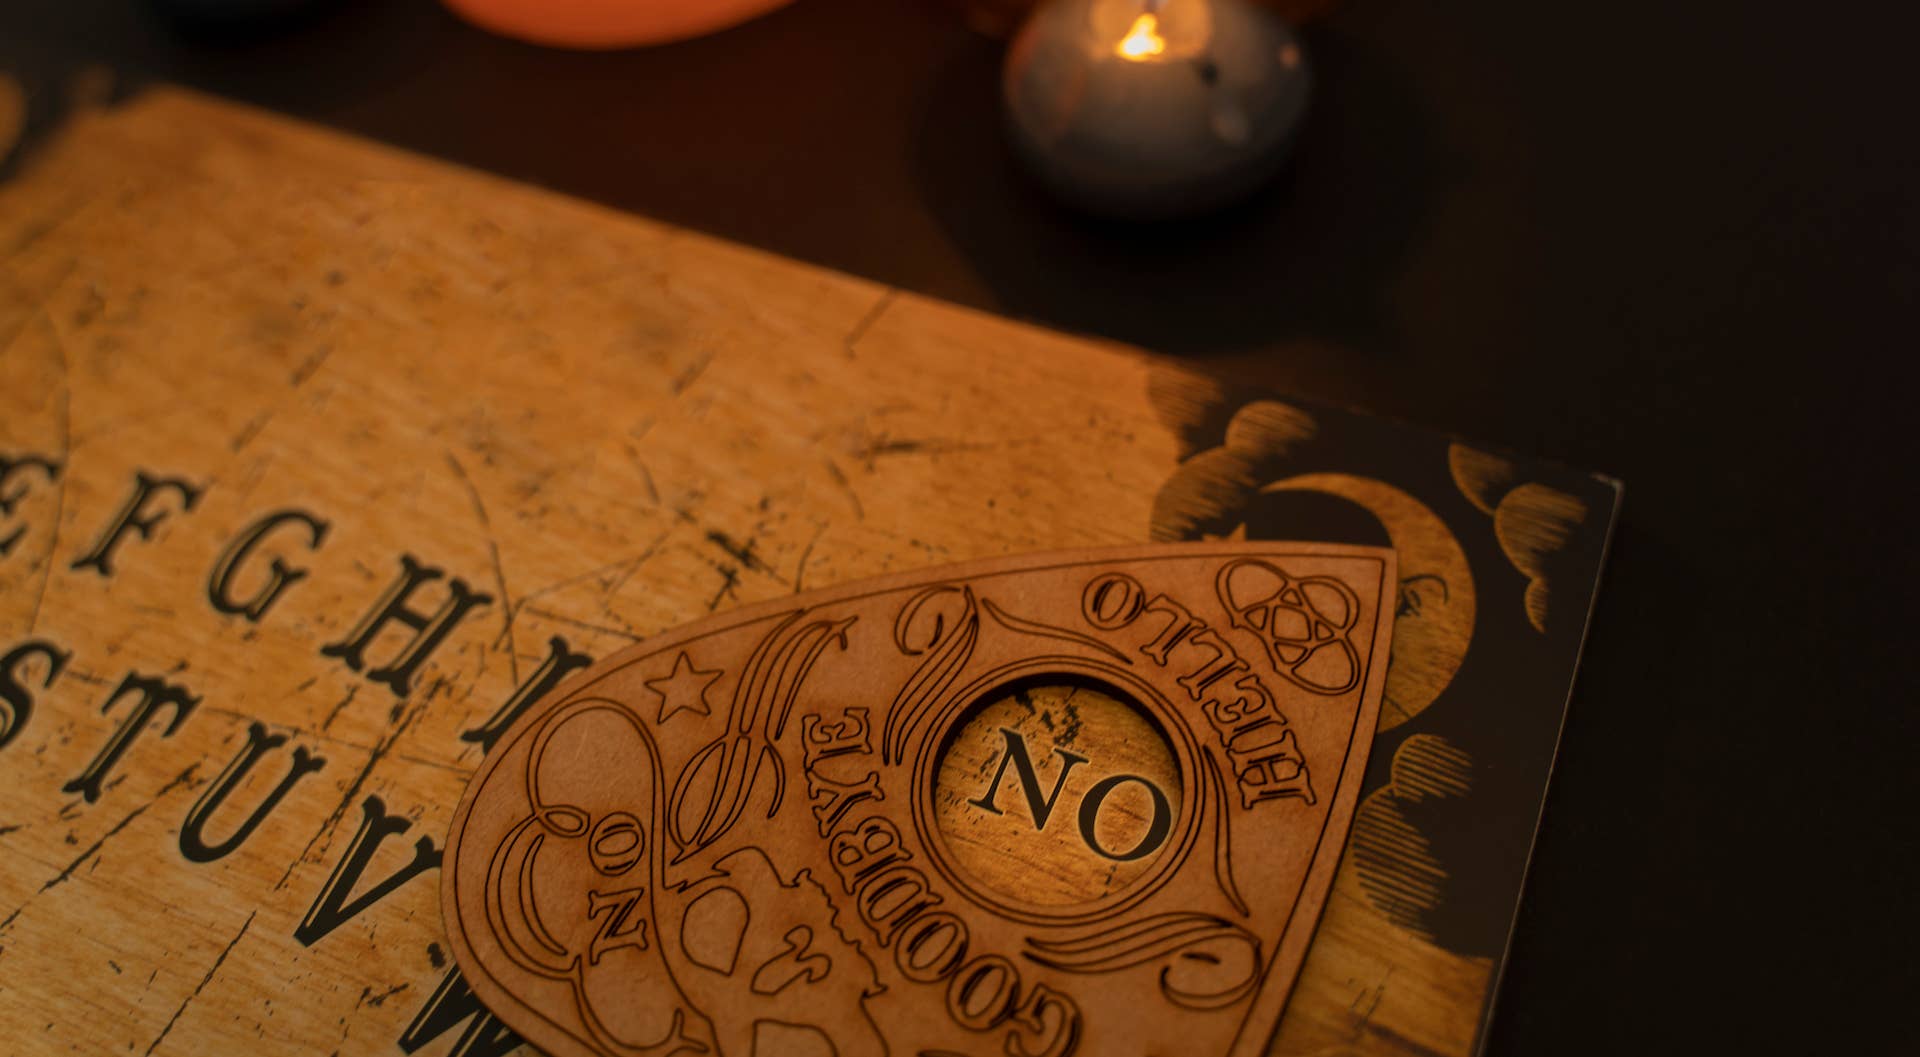 Ouija Board via Getty Images